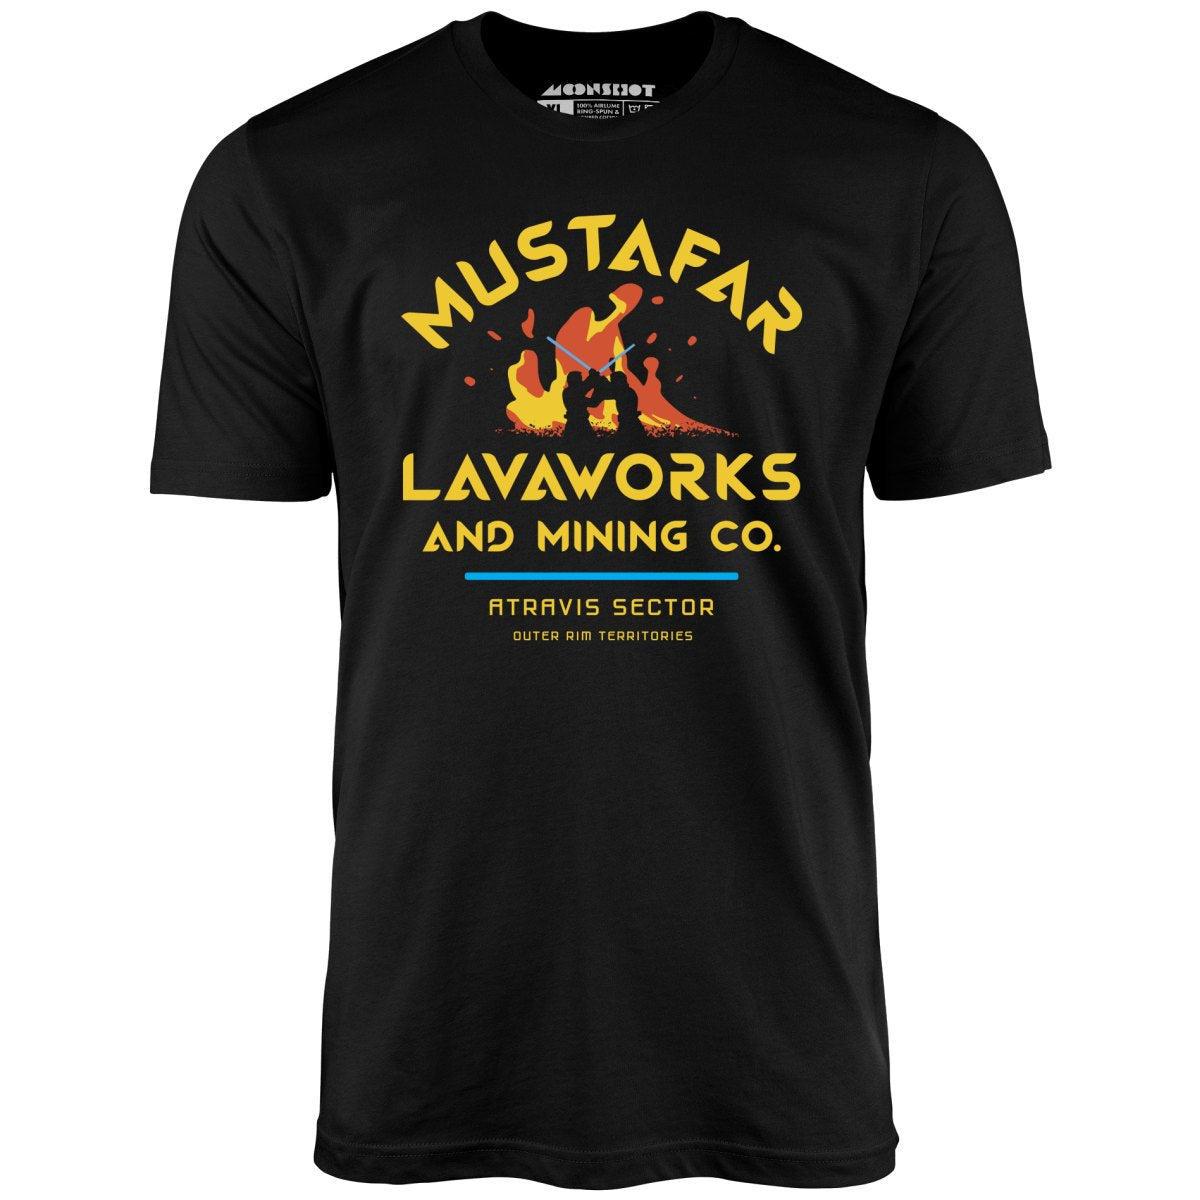 Mustafar Lavaworks and Mining Co - Unisex T-Shirt